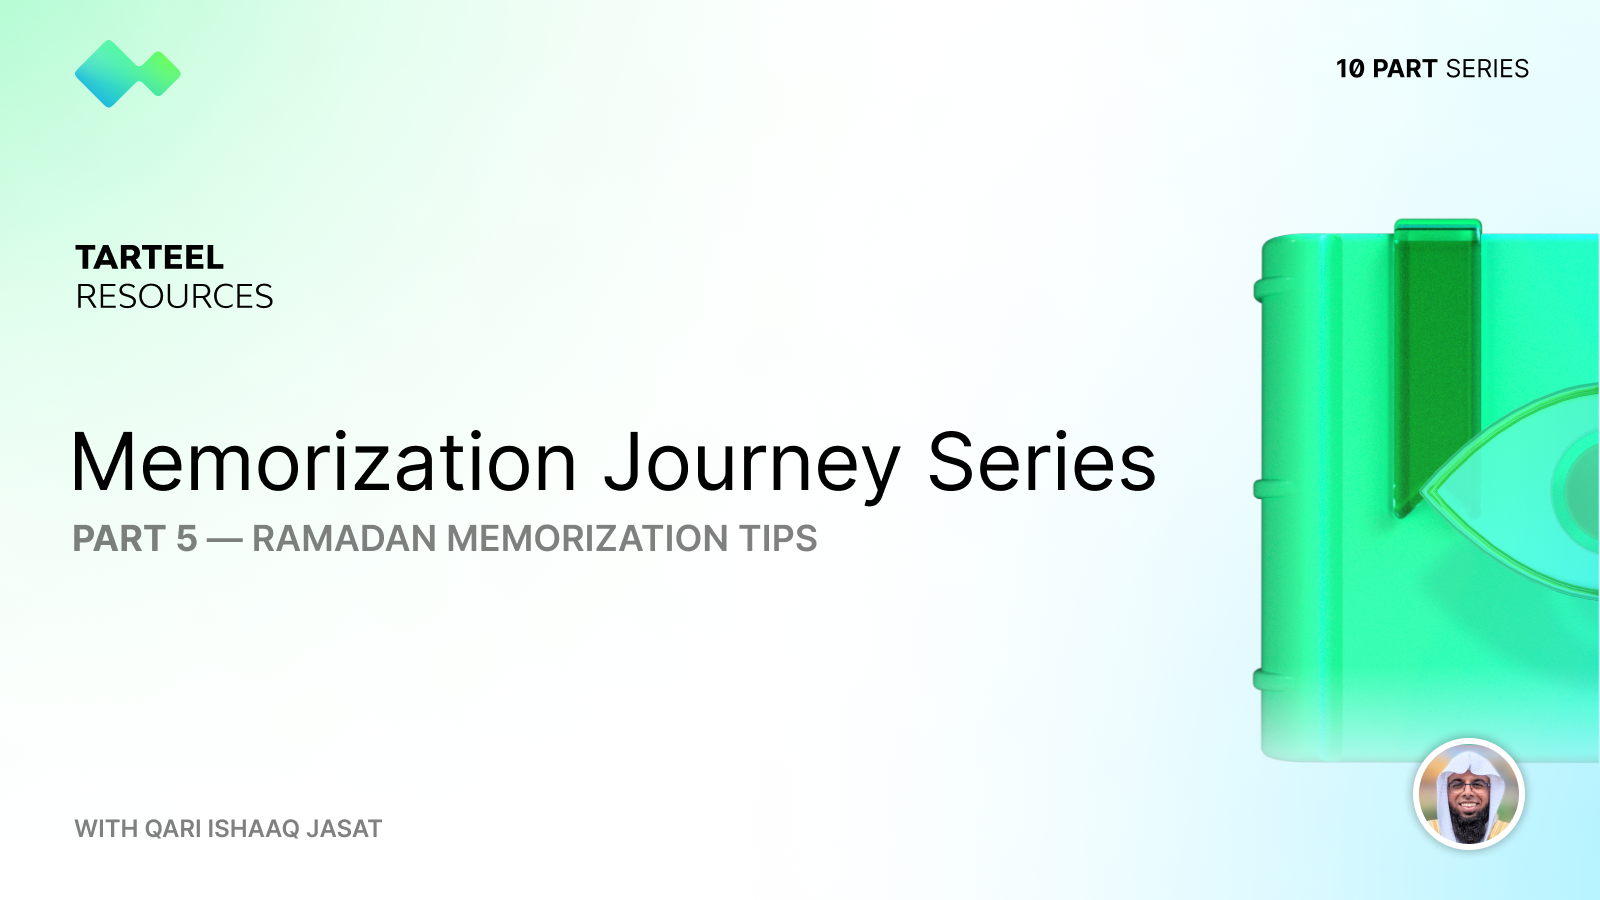 Memorization Journey Series, Part 5 - Ramadan Memorization Tips with Qari Ishaaq Jasat